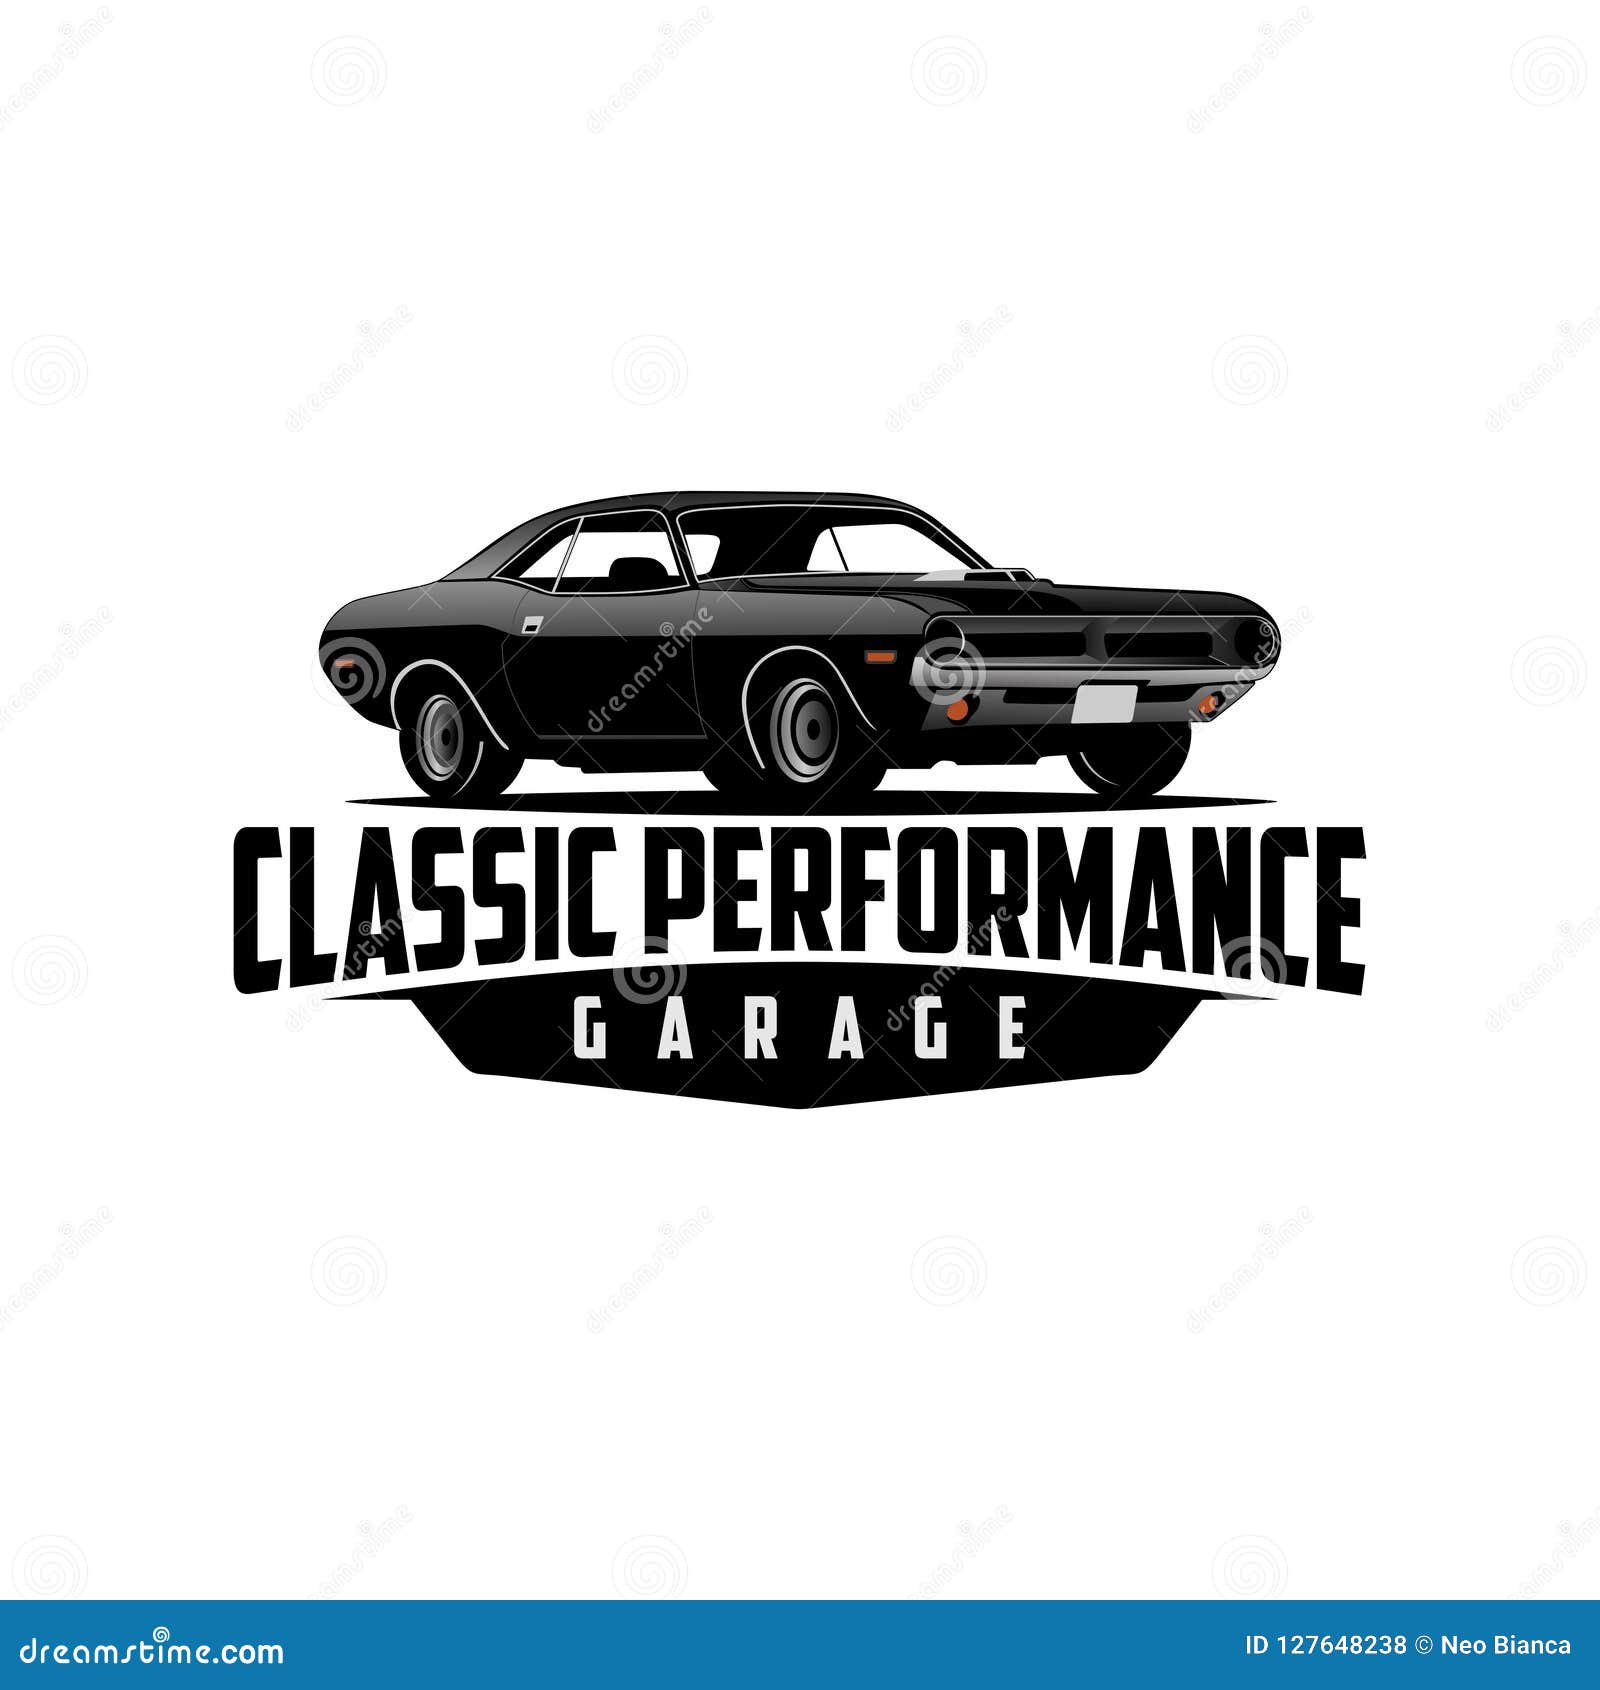 Classic Car and Performance Garage Logo Vector Stock Vector ...